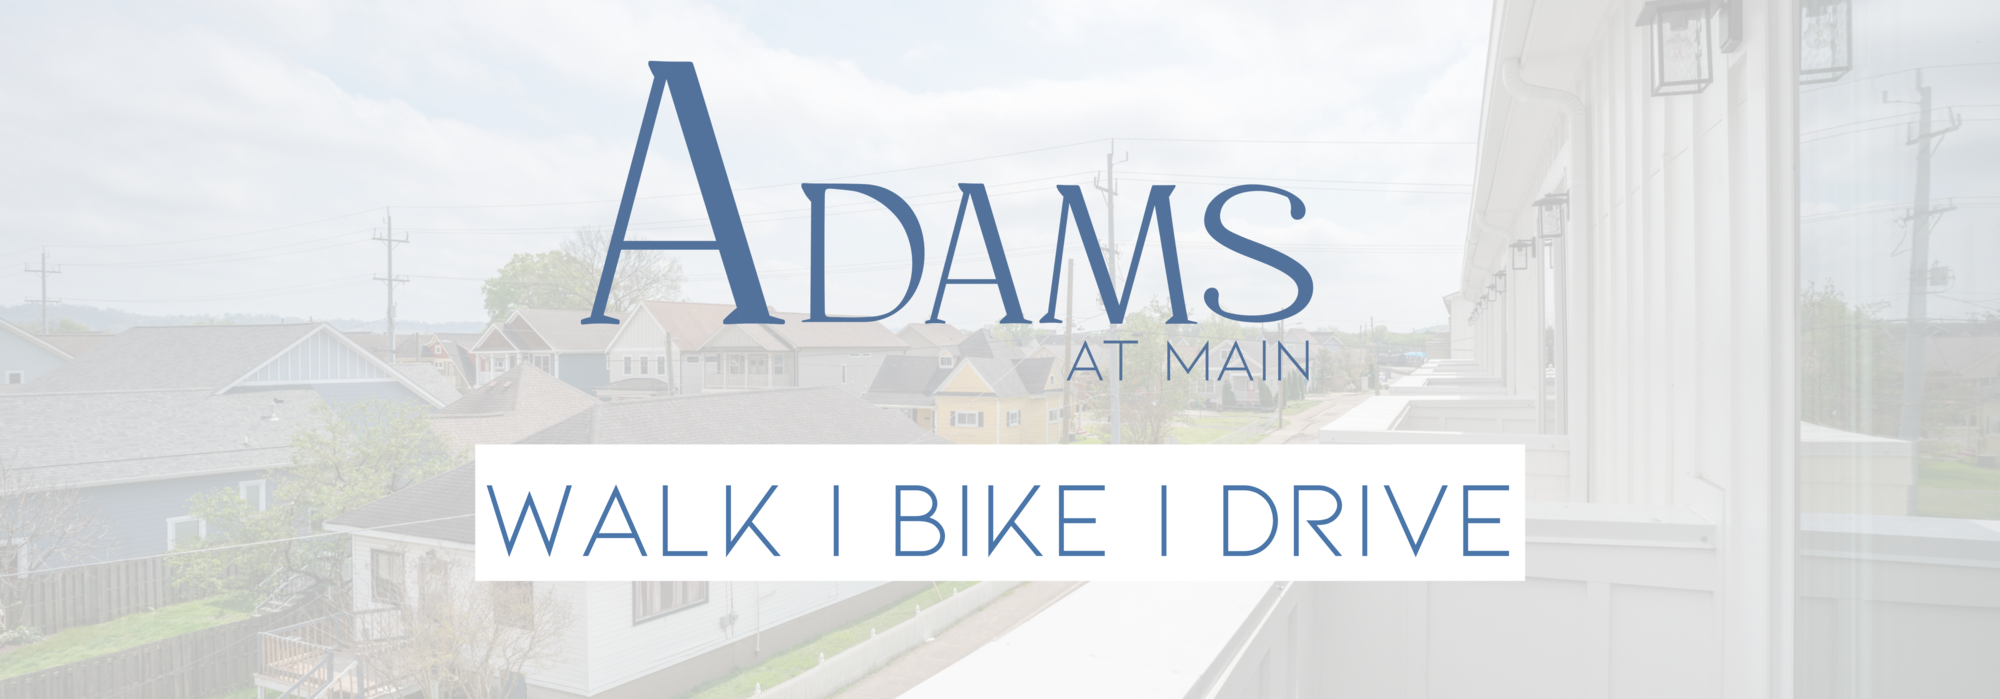 Walk Bike Drive to Adams Street 